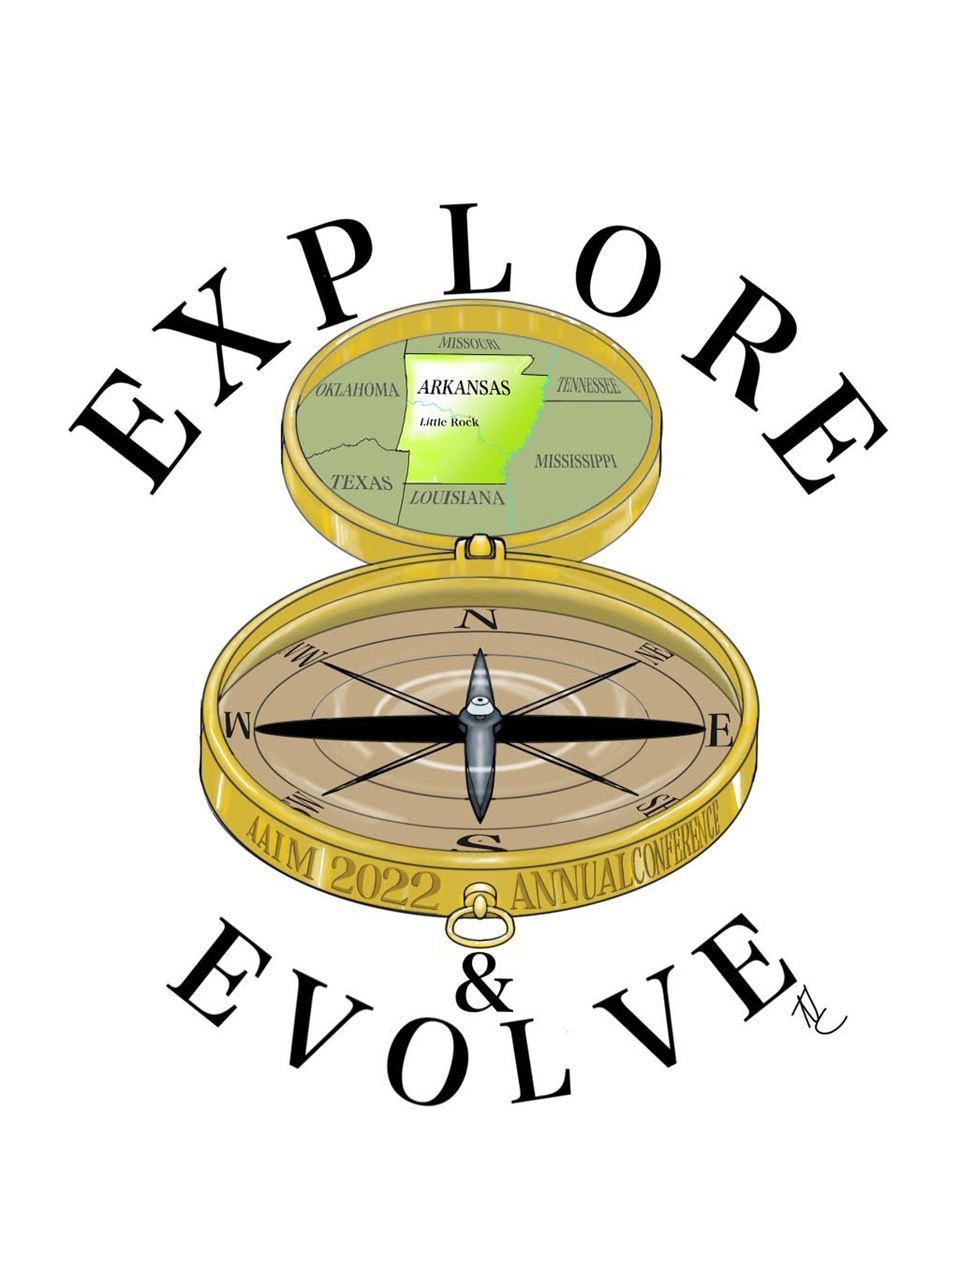 AAIM Conference: Explore & Evolve